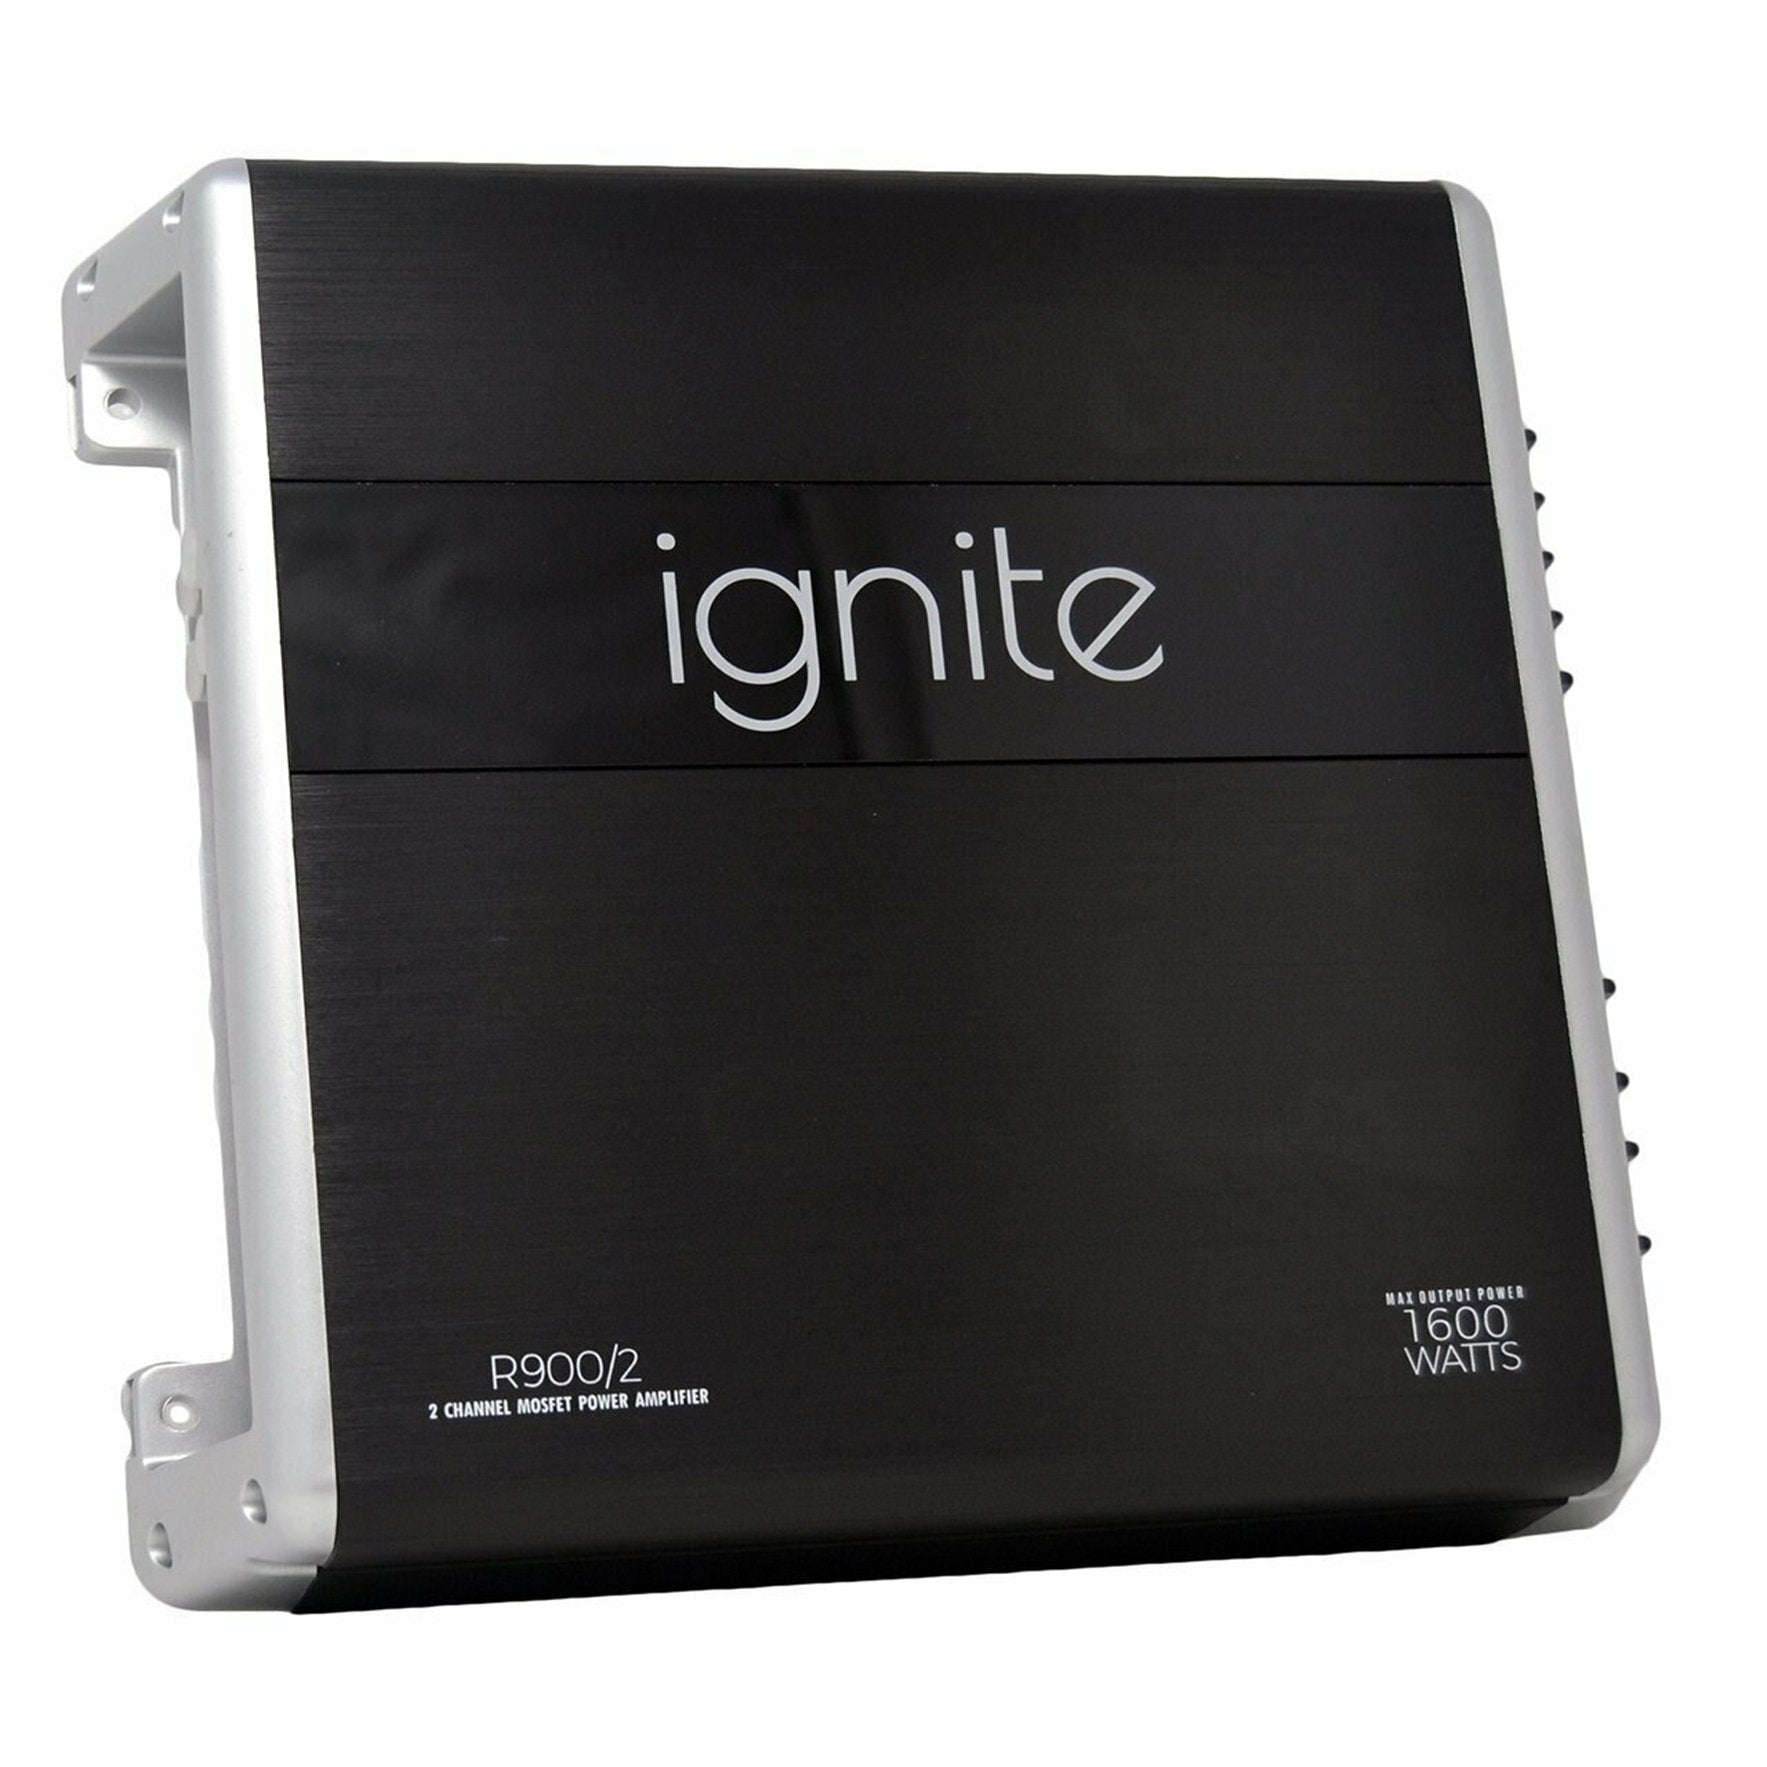 Ignite R900/2, 2 Channel Class A/B Car Amplifier, 1600 Watts